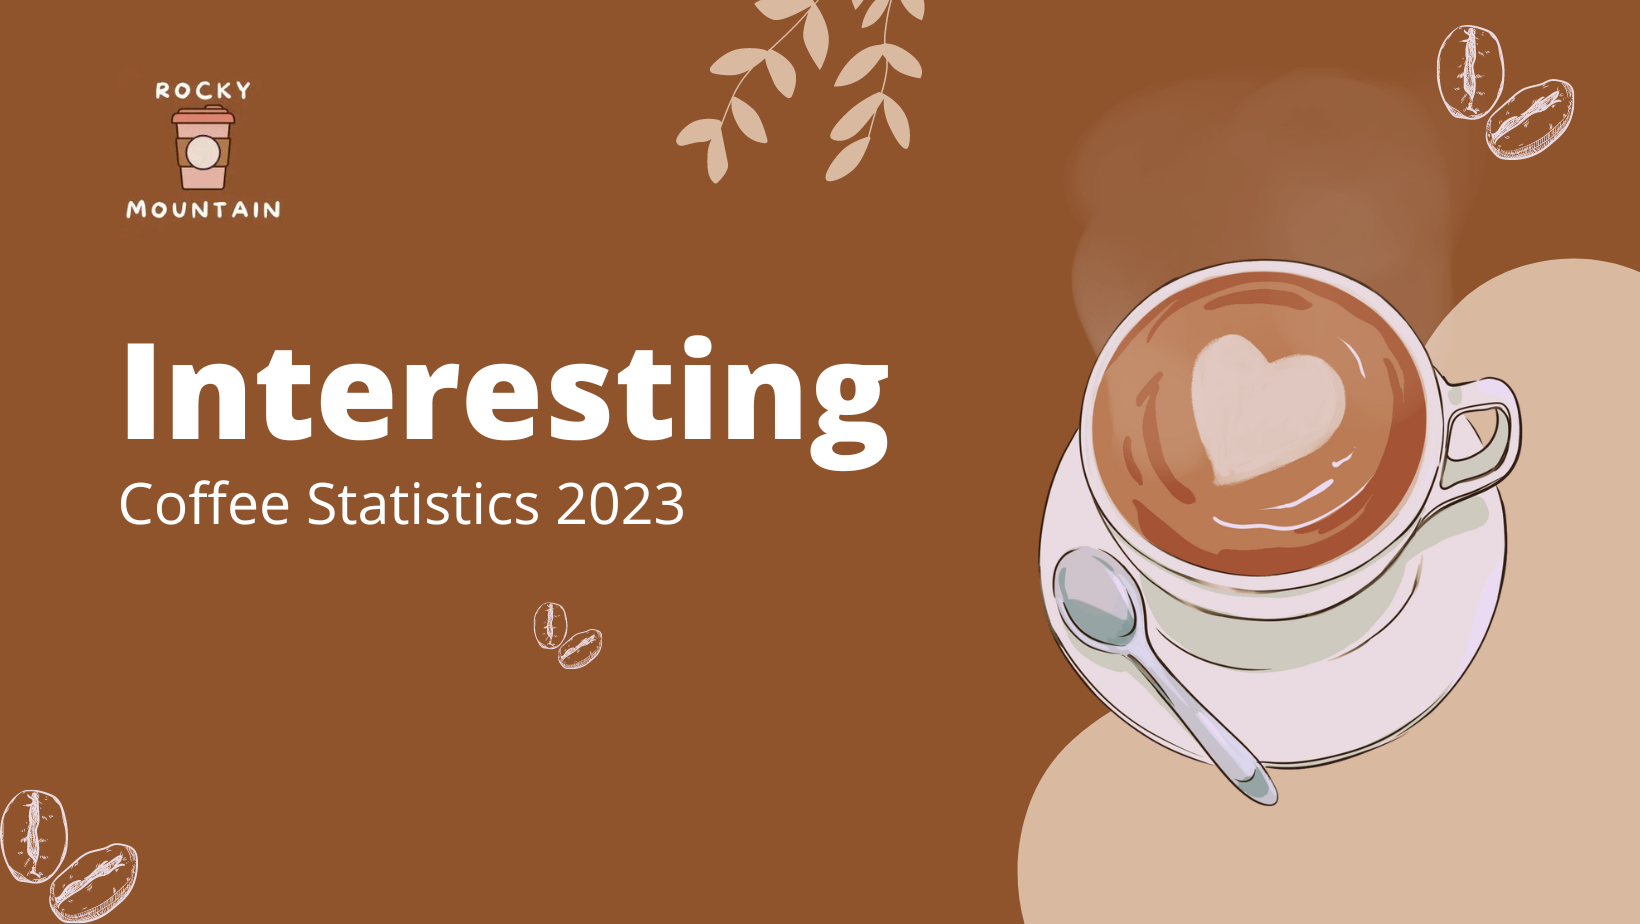 Coffee Statistics 2023 